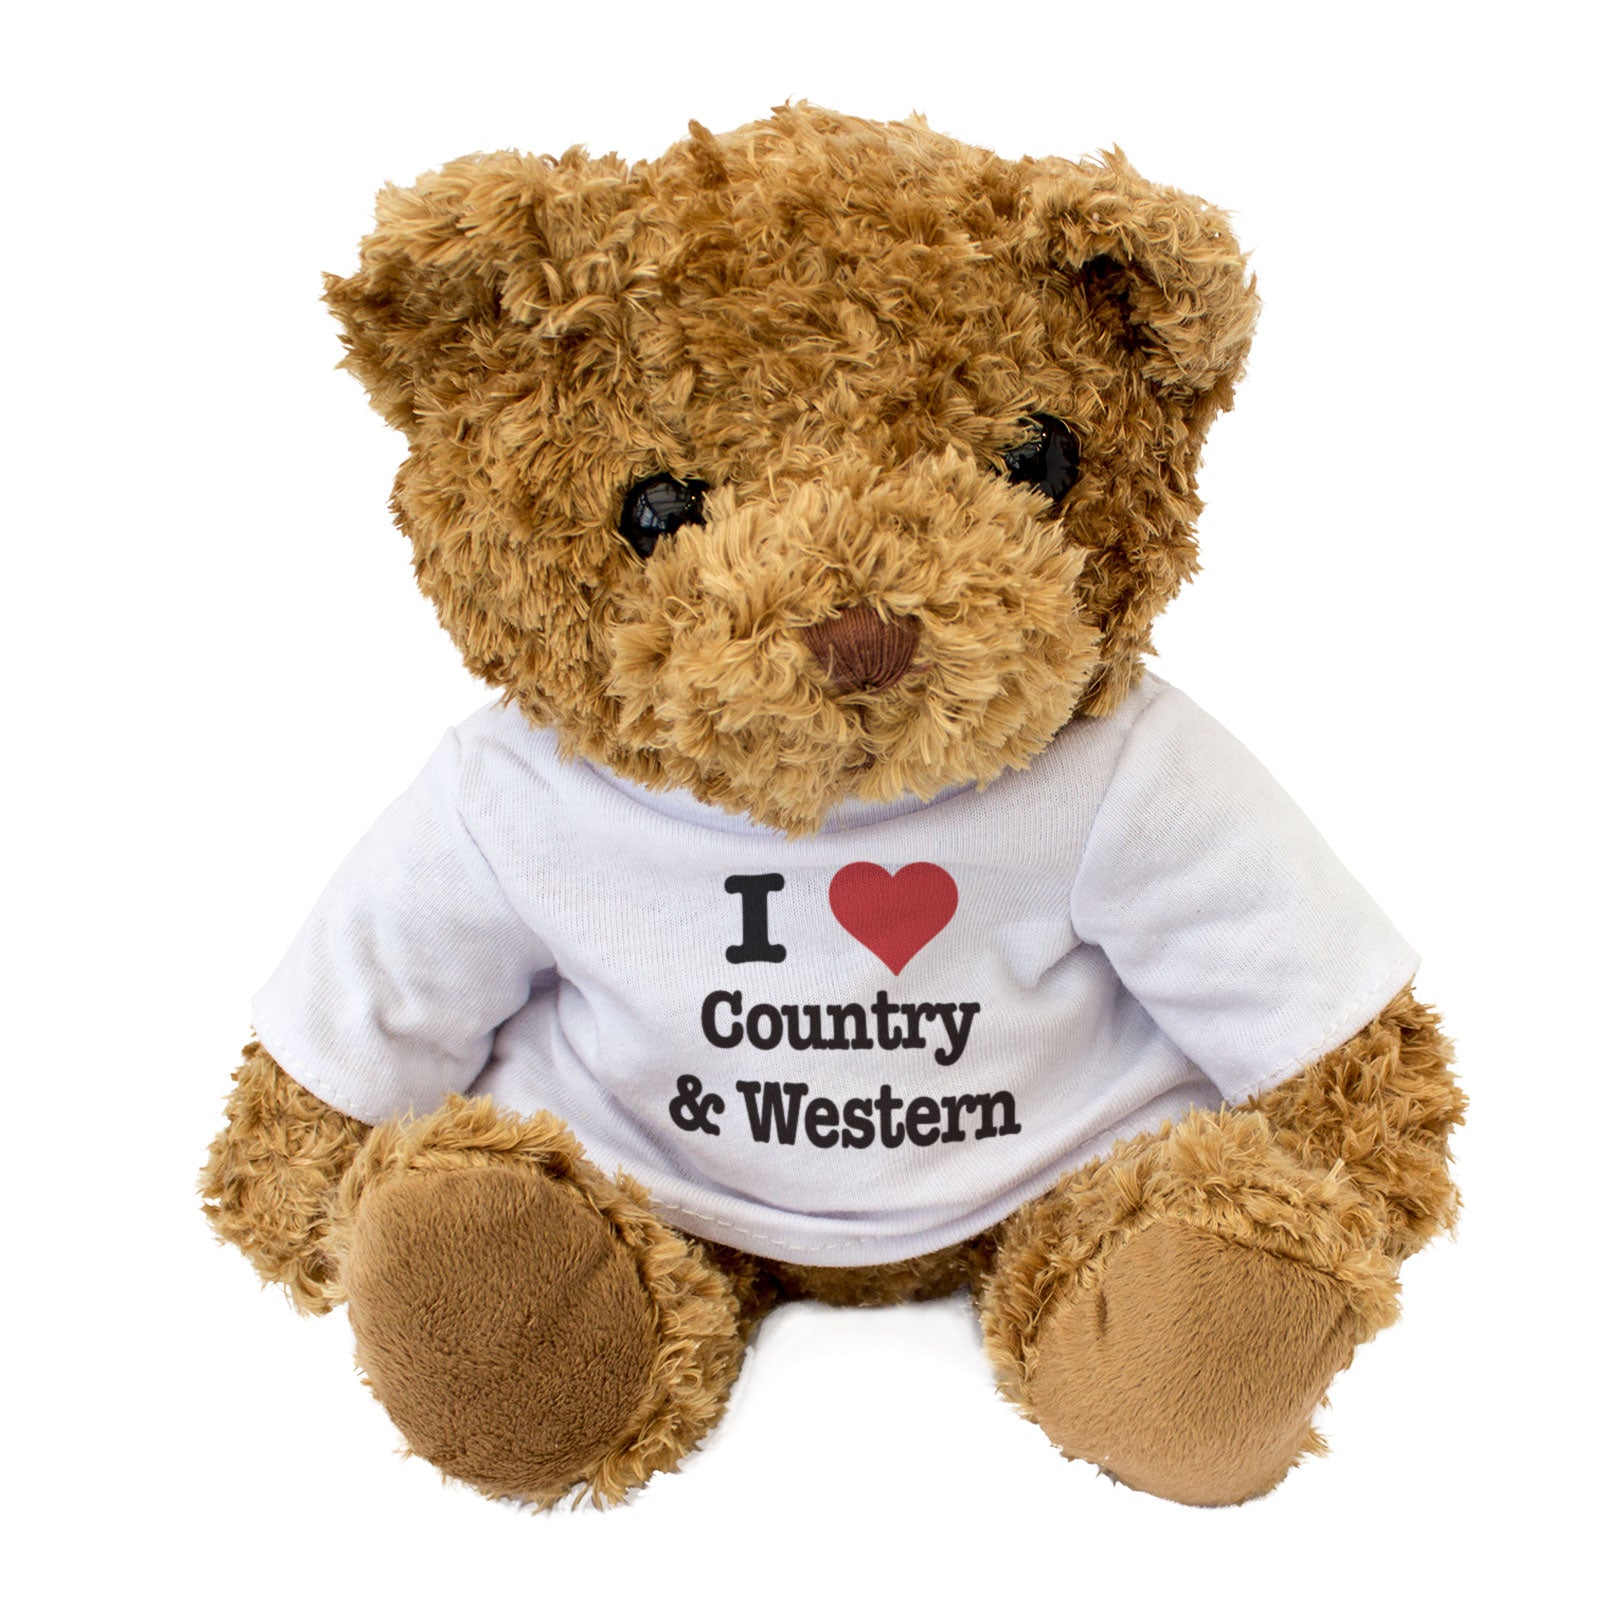 I Love Country & Western - Teddy Bear